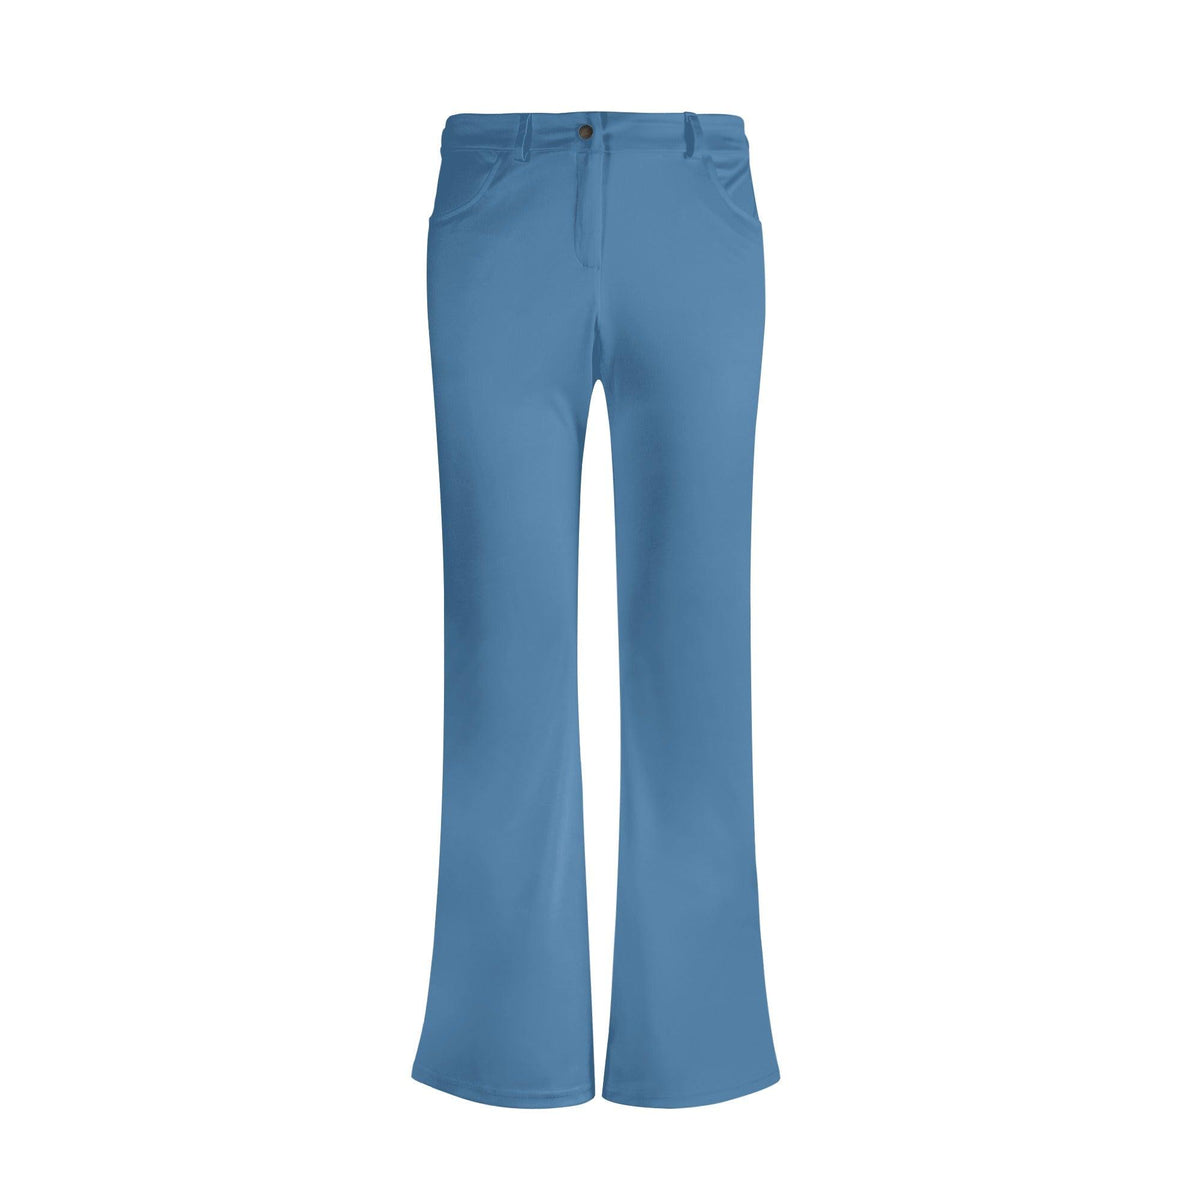 Pinsa Flare Zip Leggings Pants - Blue Bell Bottoms Tights Solid Zipper Belt Loop Funky Retro